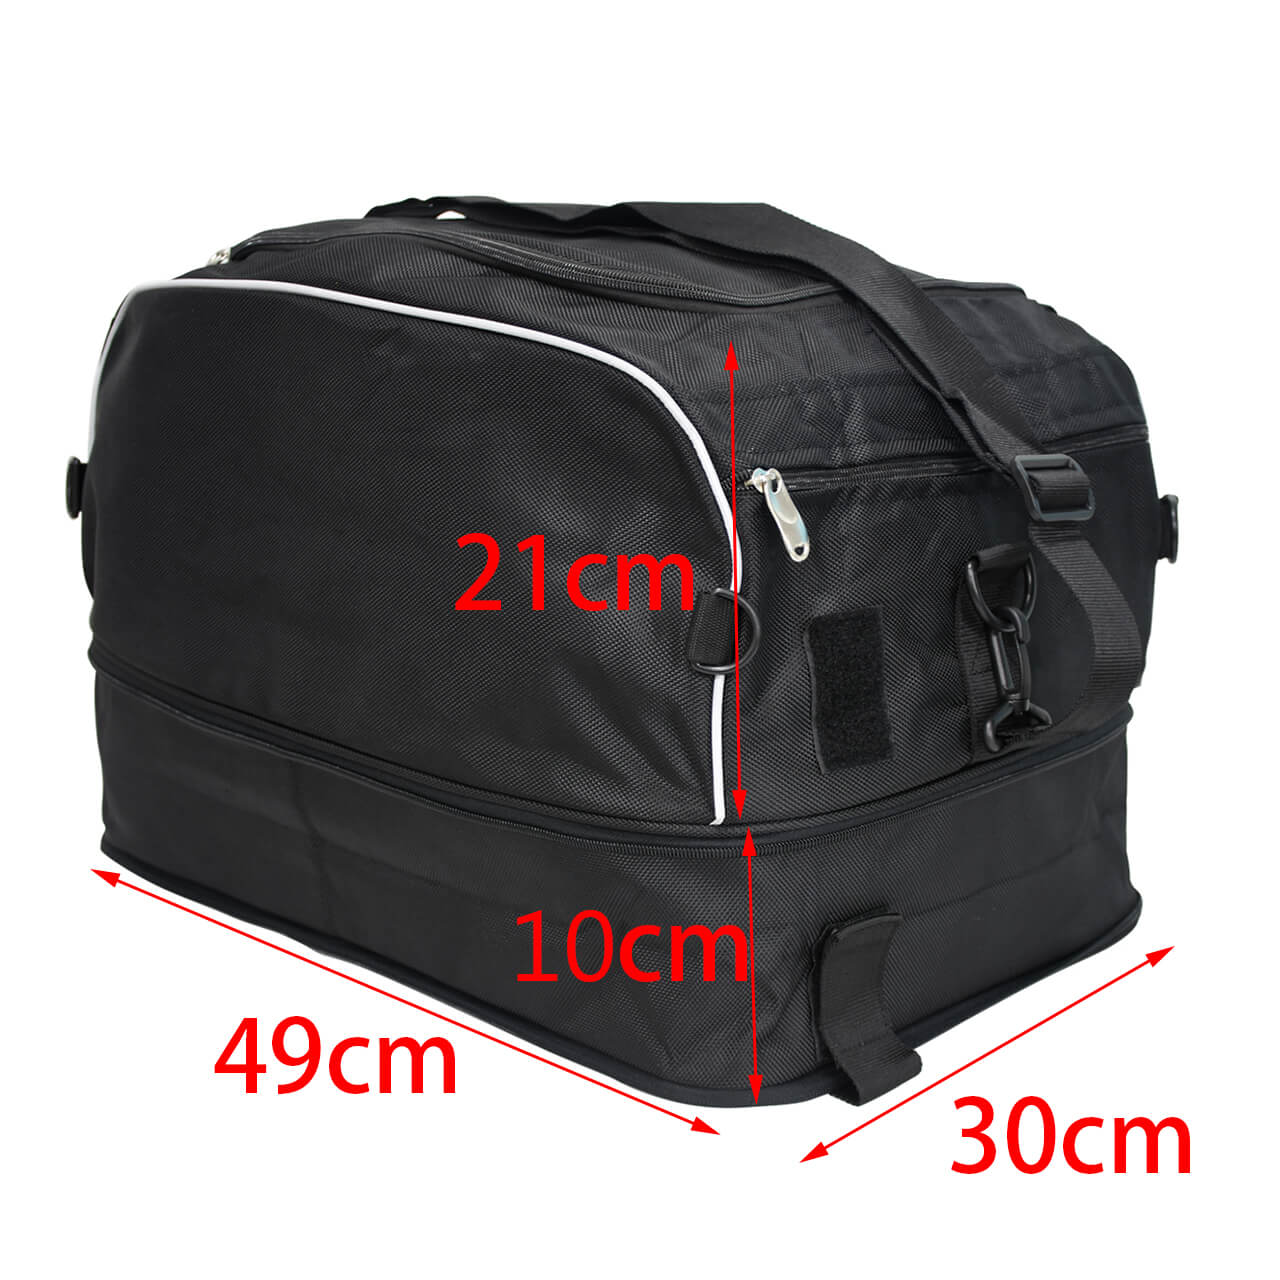 CB0077-waterproof-luggage-rack-bag-for-harley-size